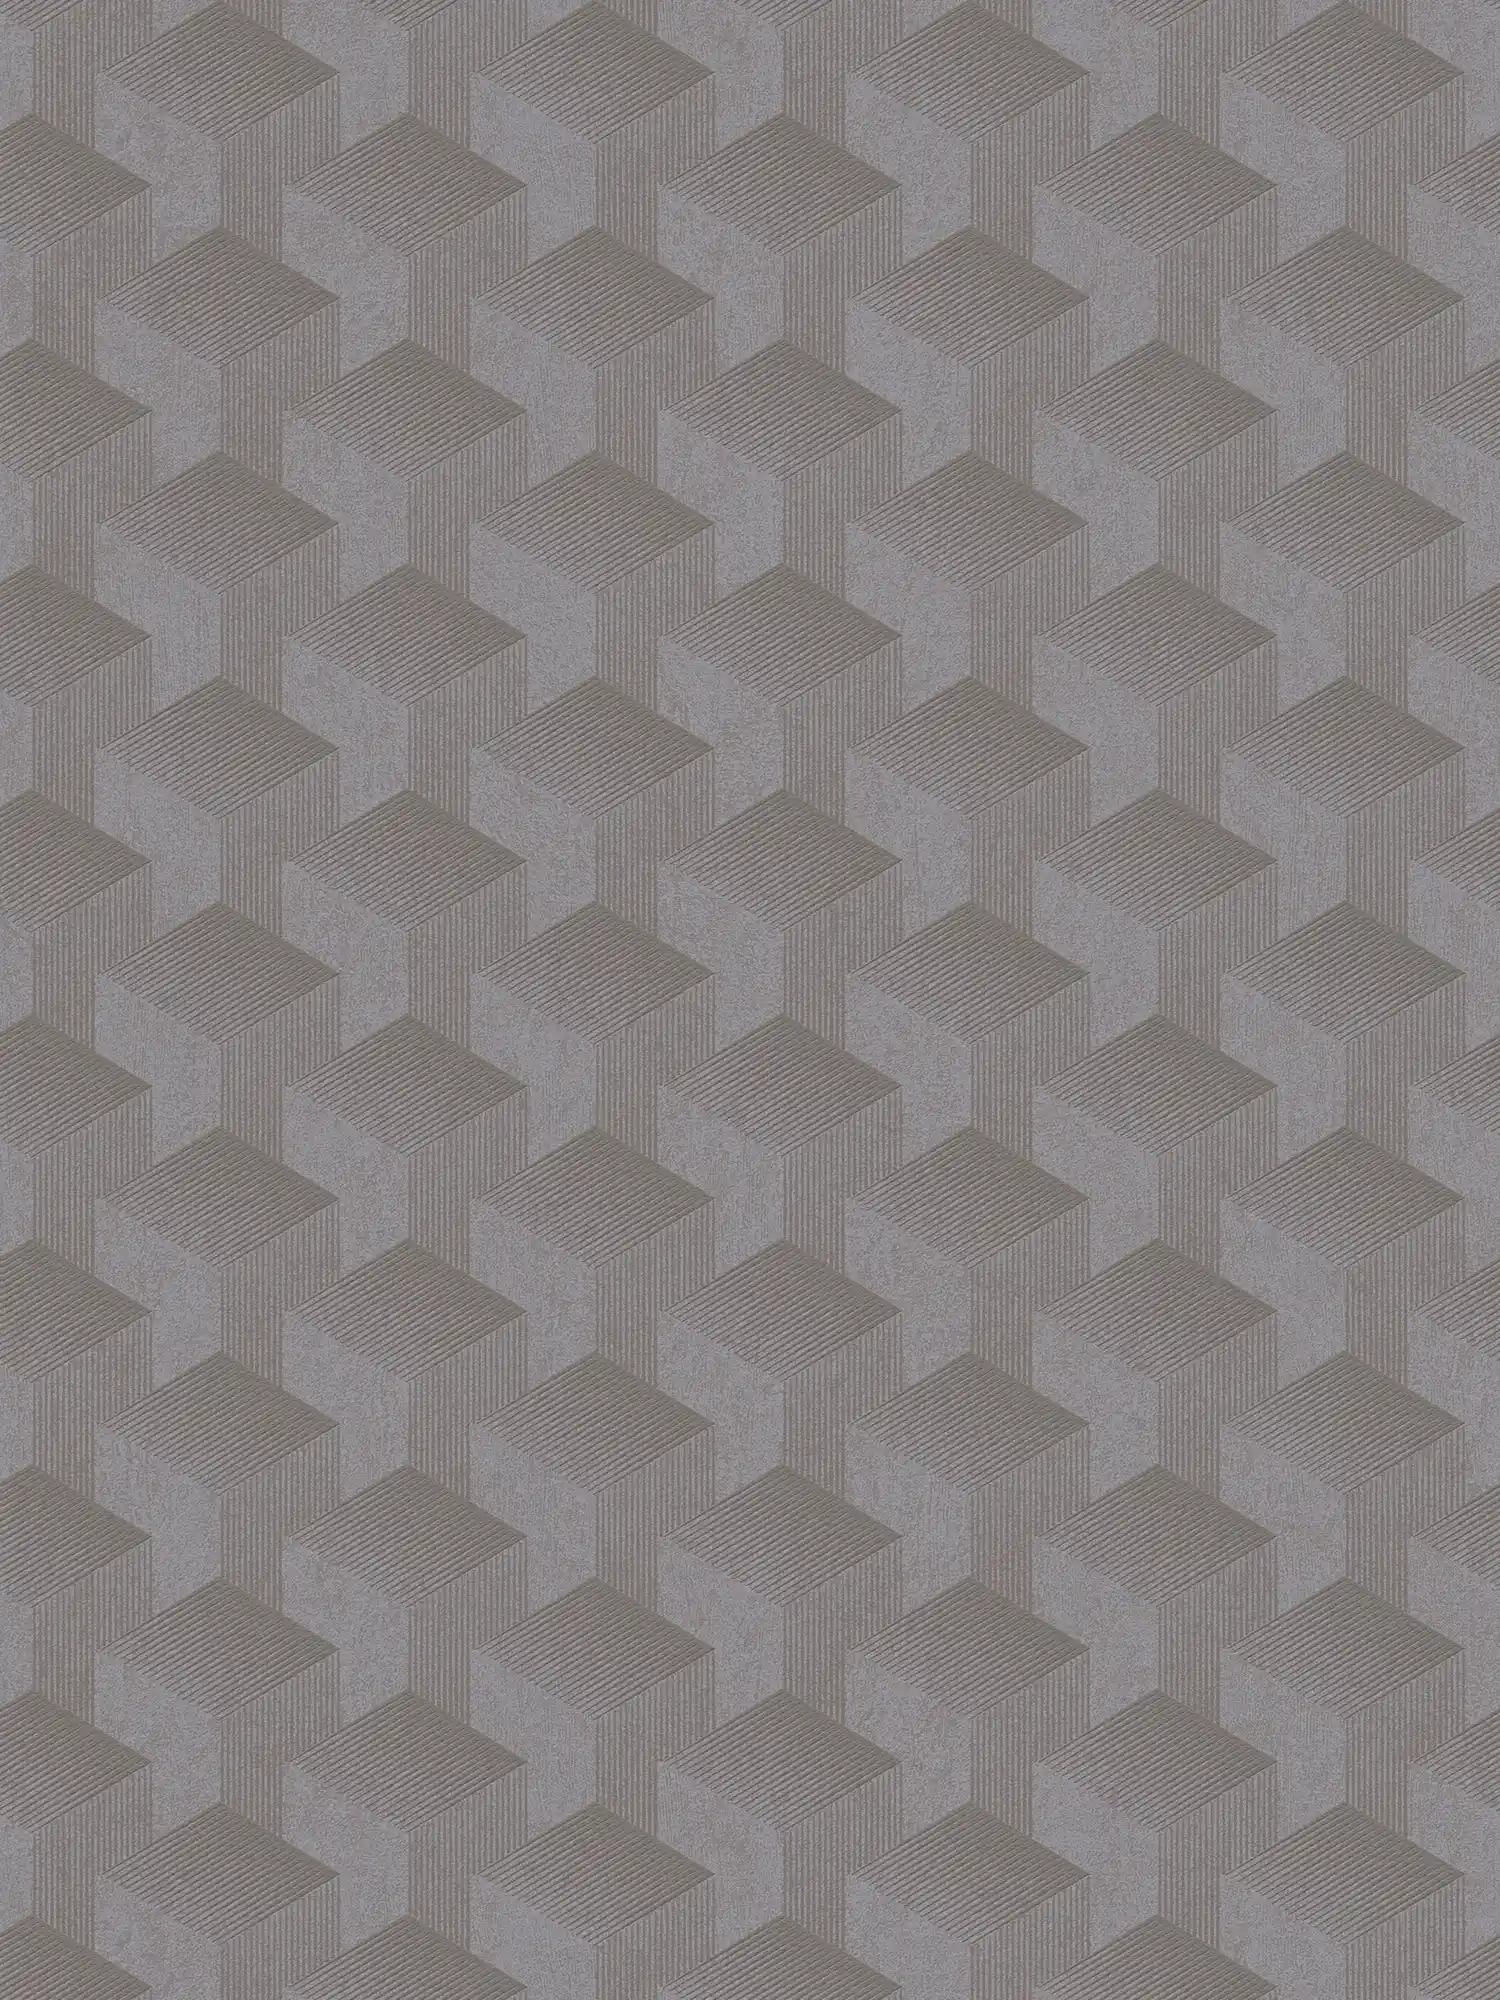 Geometric wallpaper with 3D graphic pattern matt - grey
